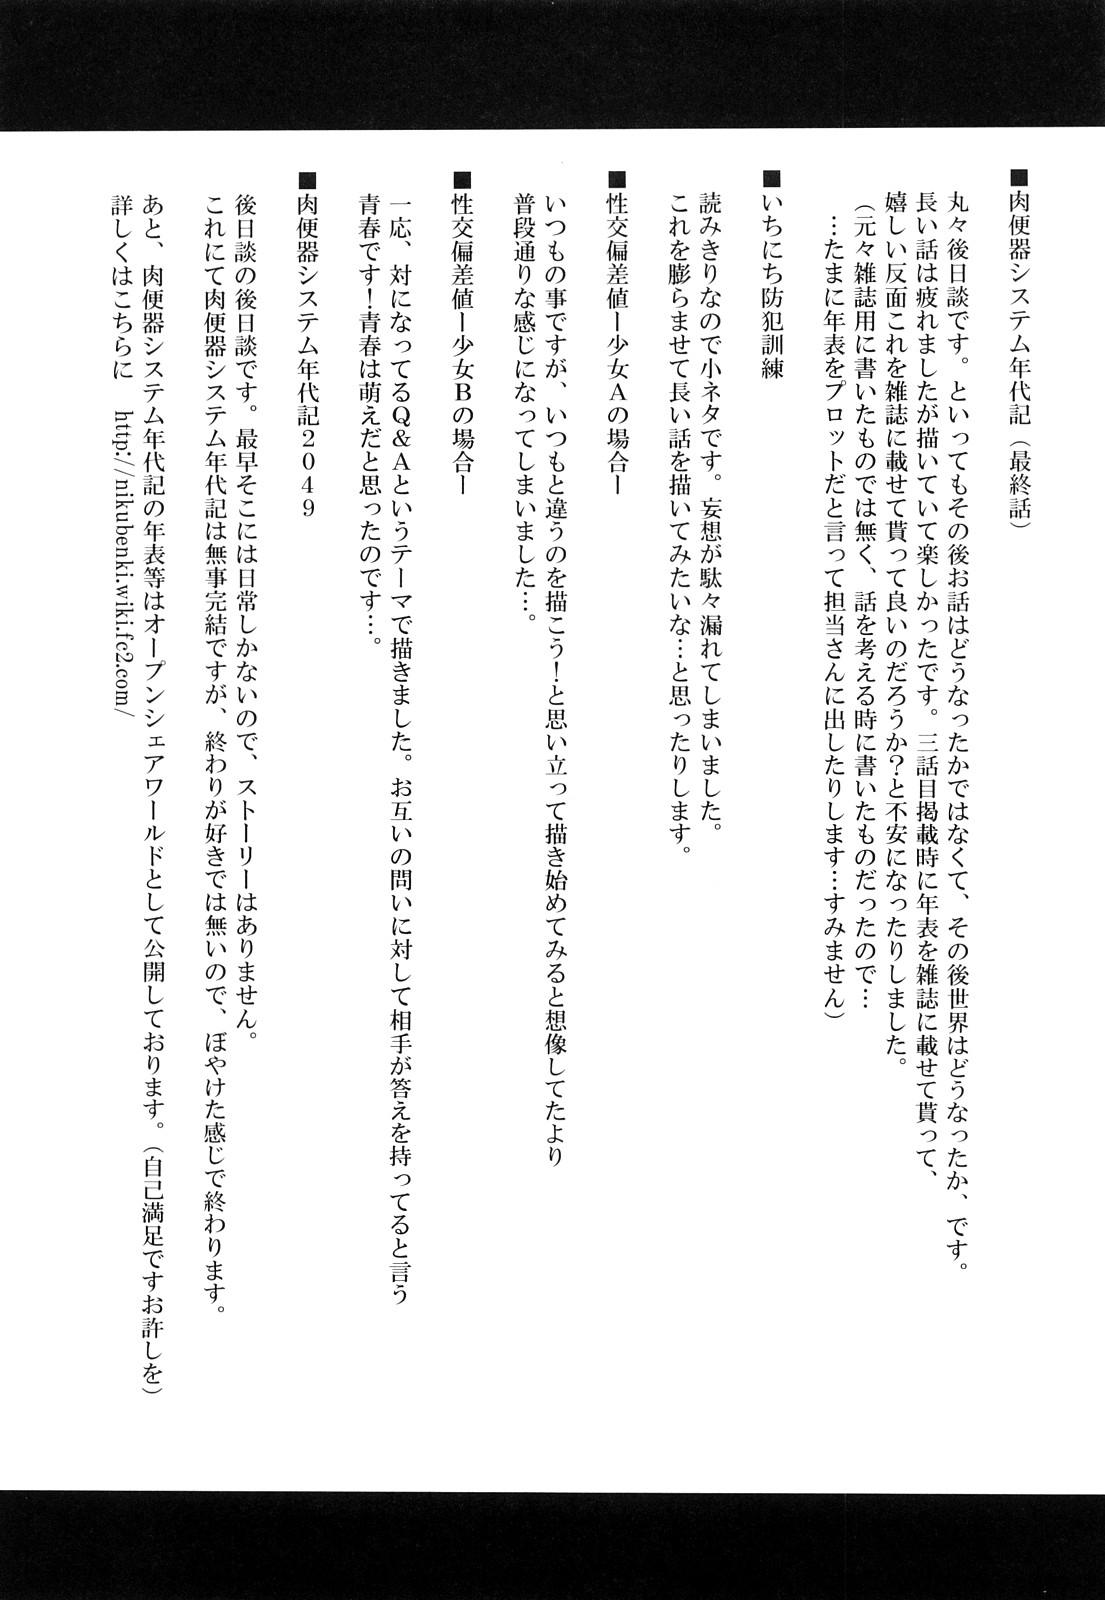 Nikubenki System Chronicle Ch. 1, 5 13